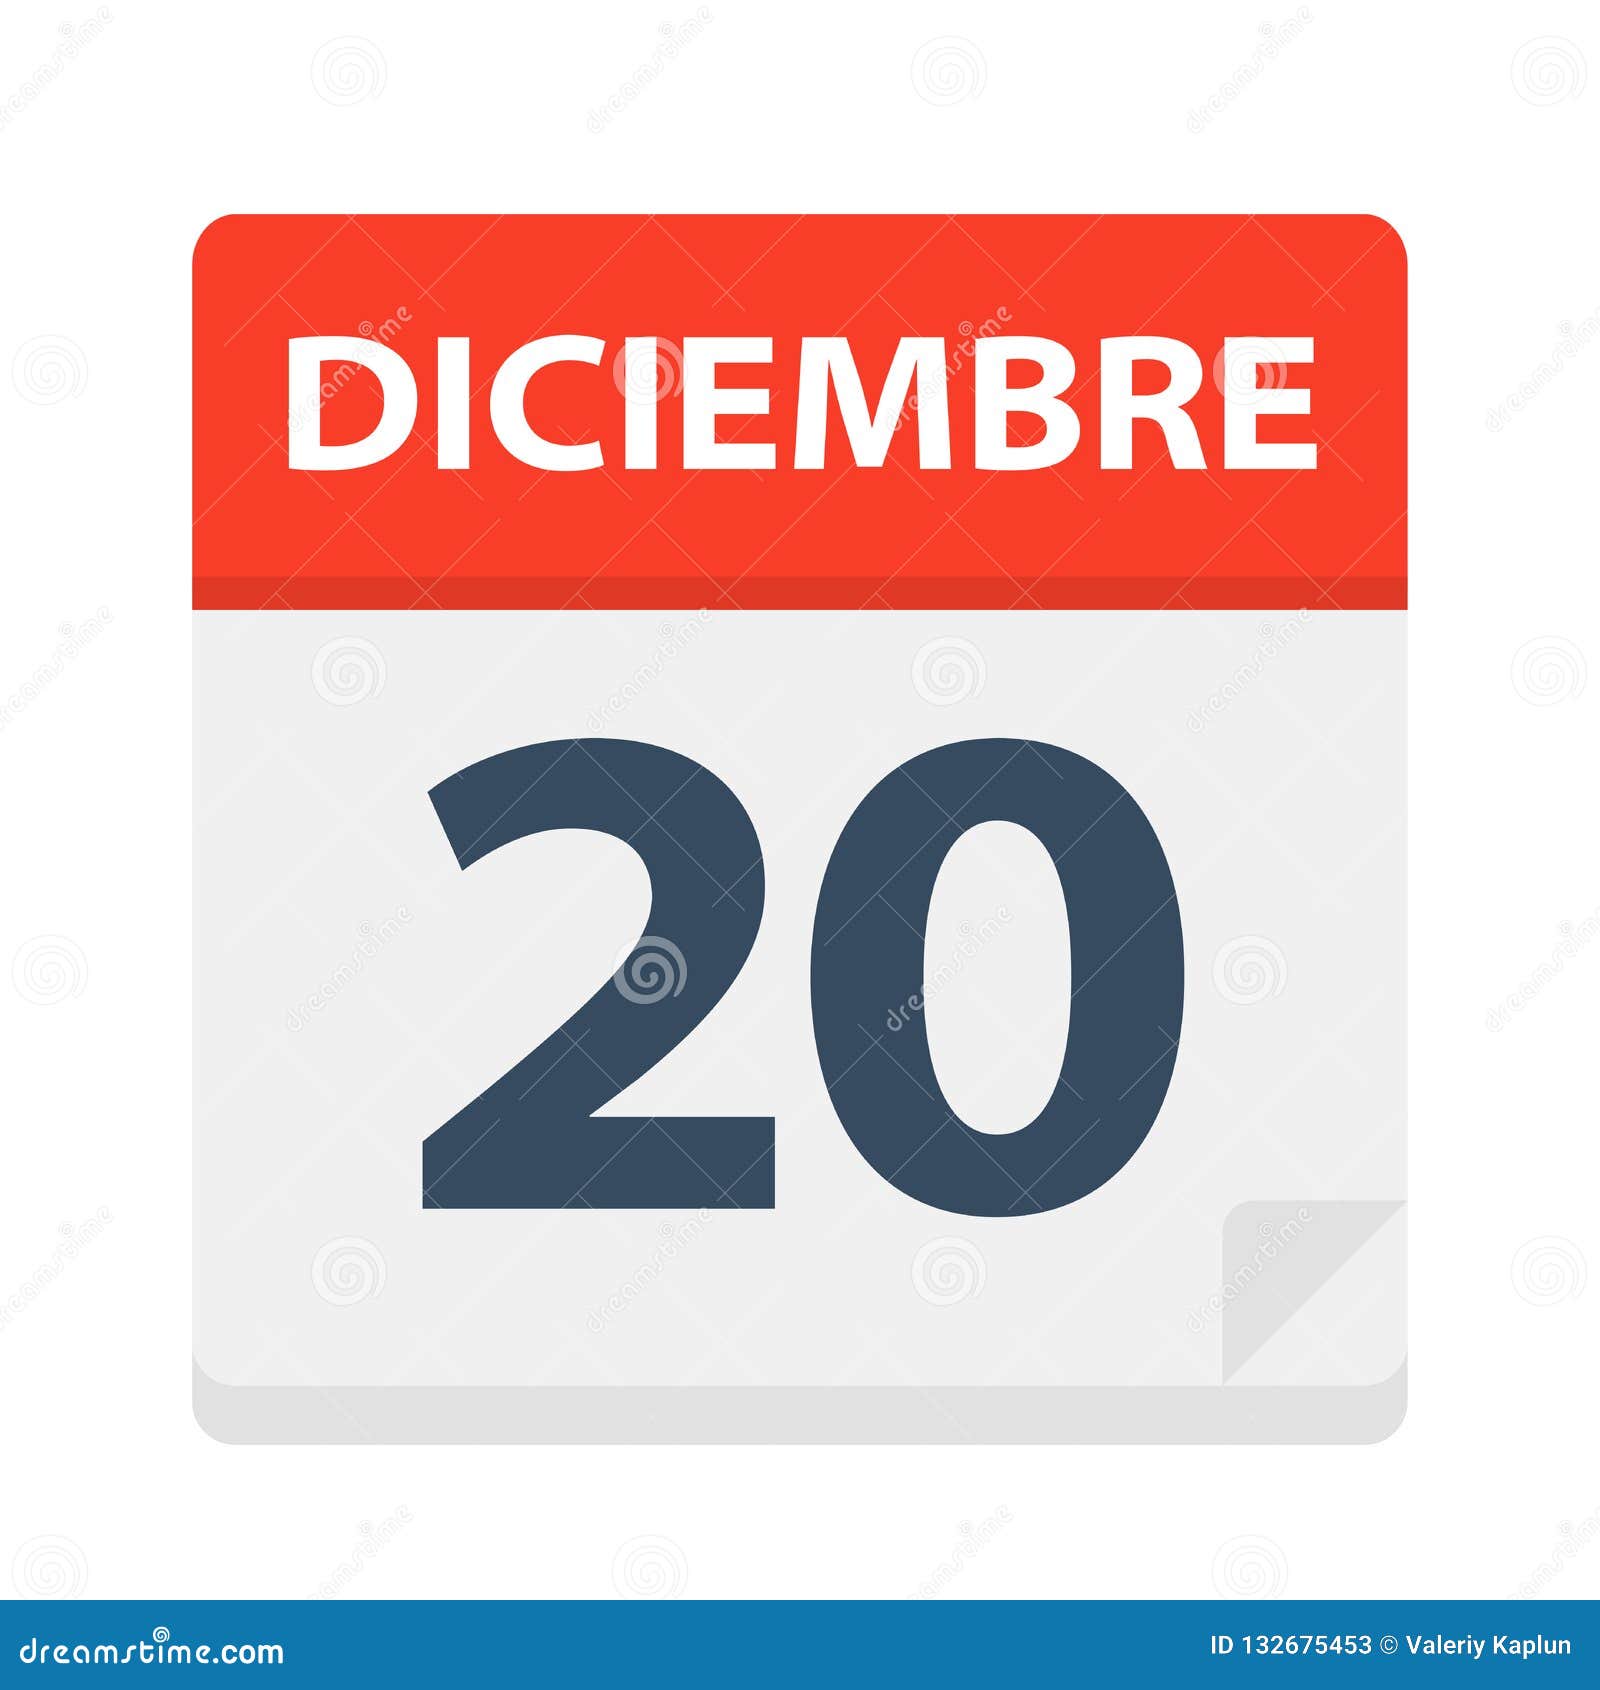 diciembre 20 - calendar icon - december 20.   of spanish calendar leaf